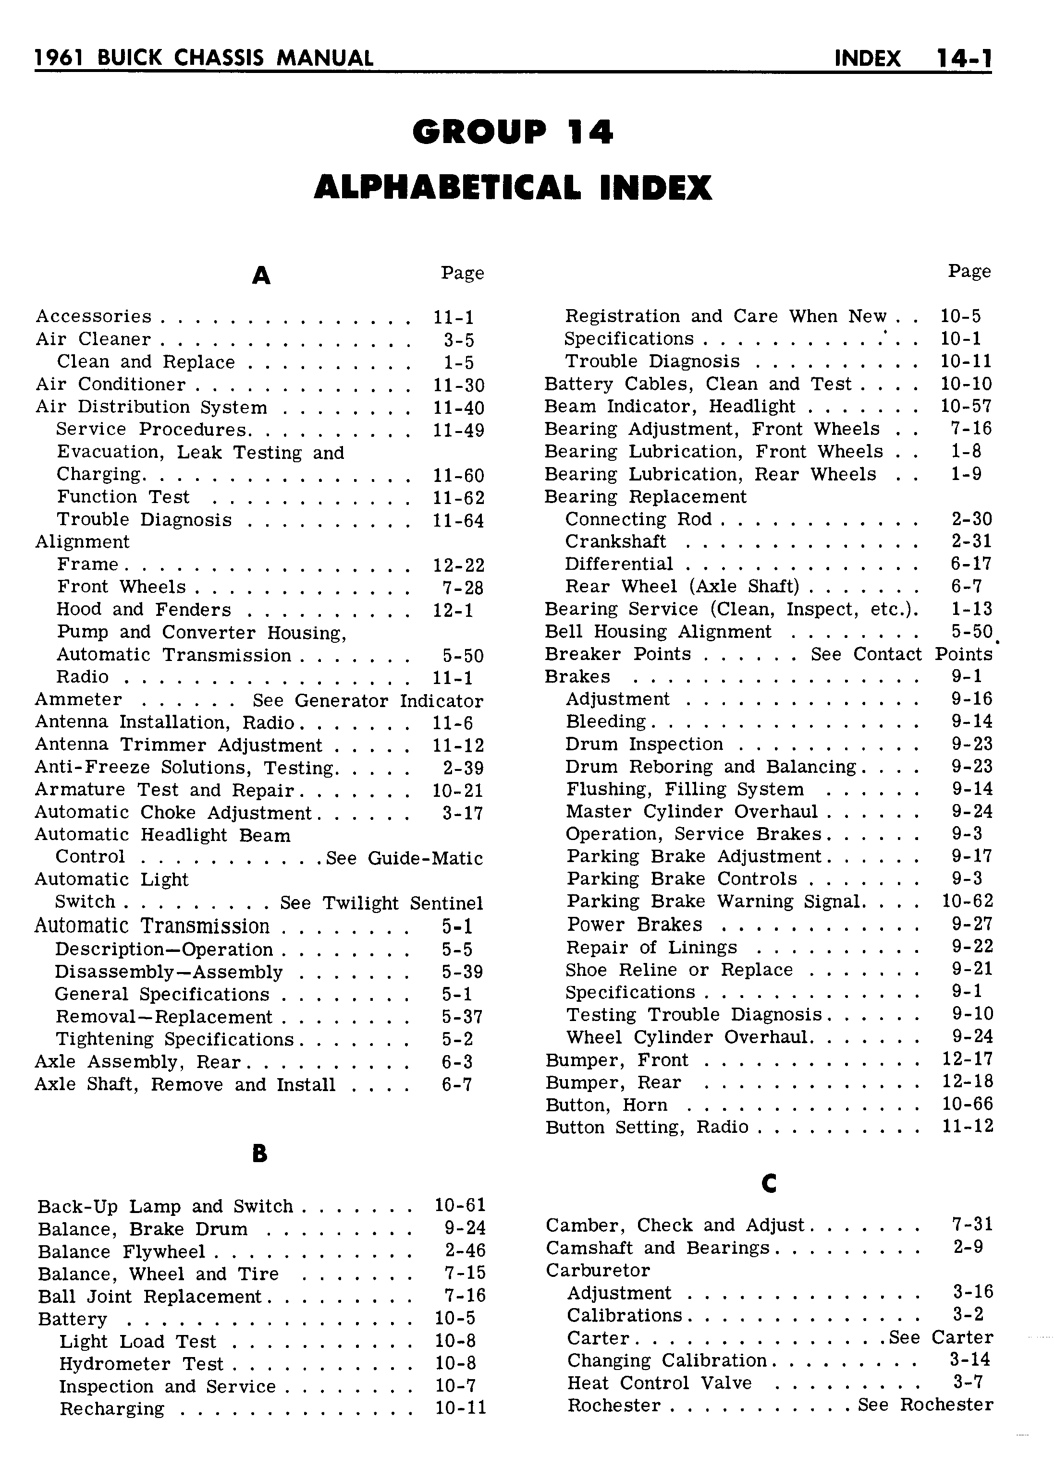 n_13 1961 Buick Shop Manual - Index-001-001.jpg